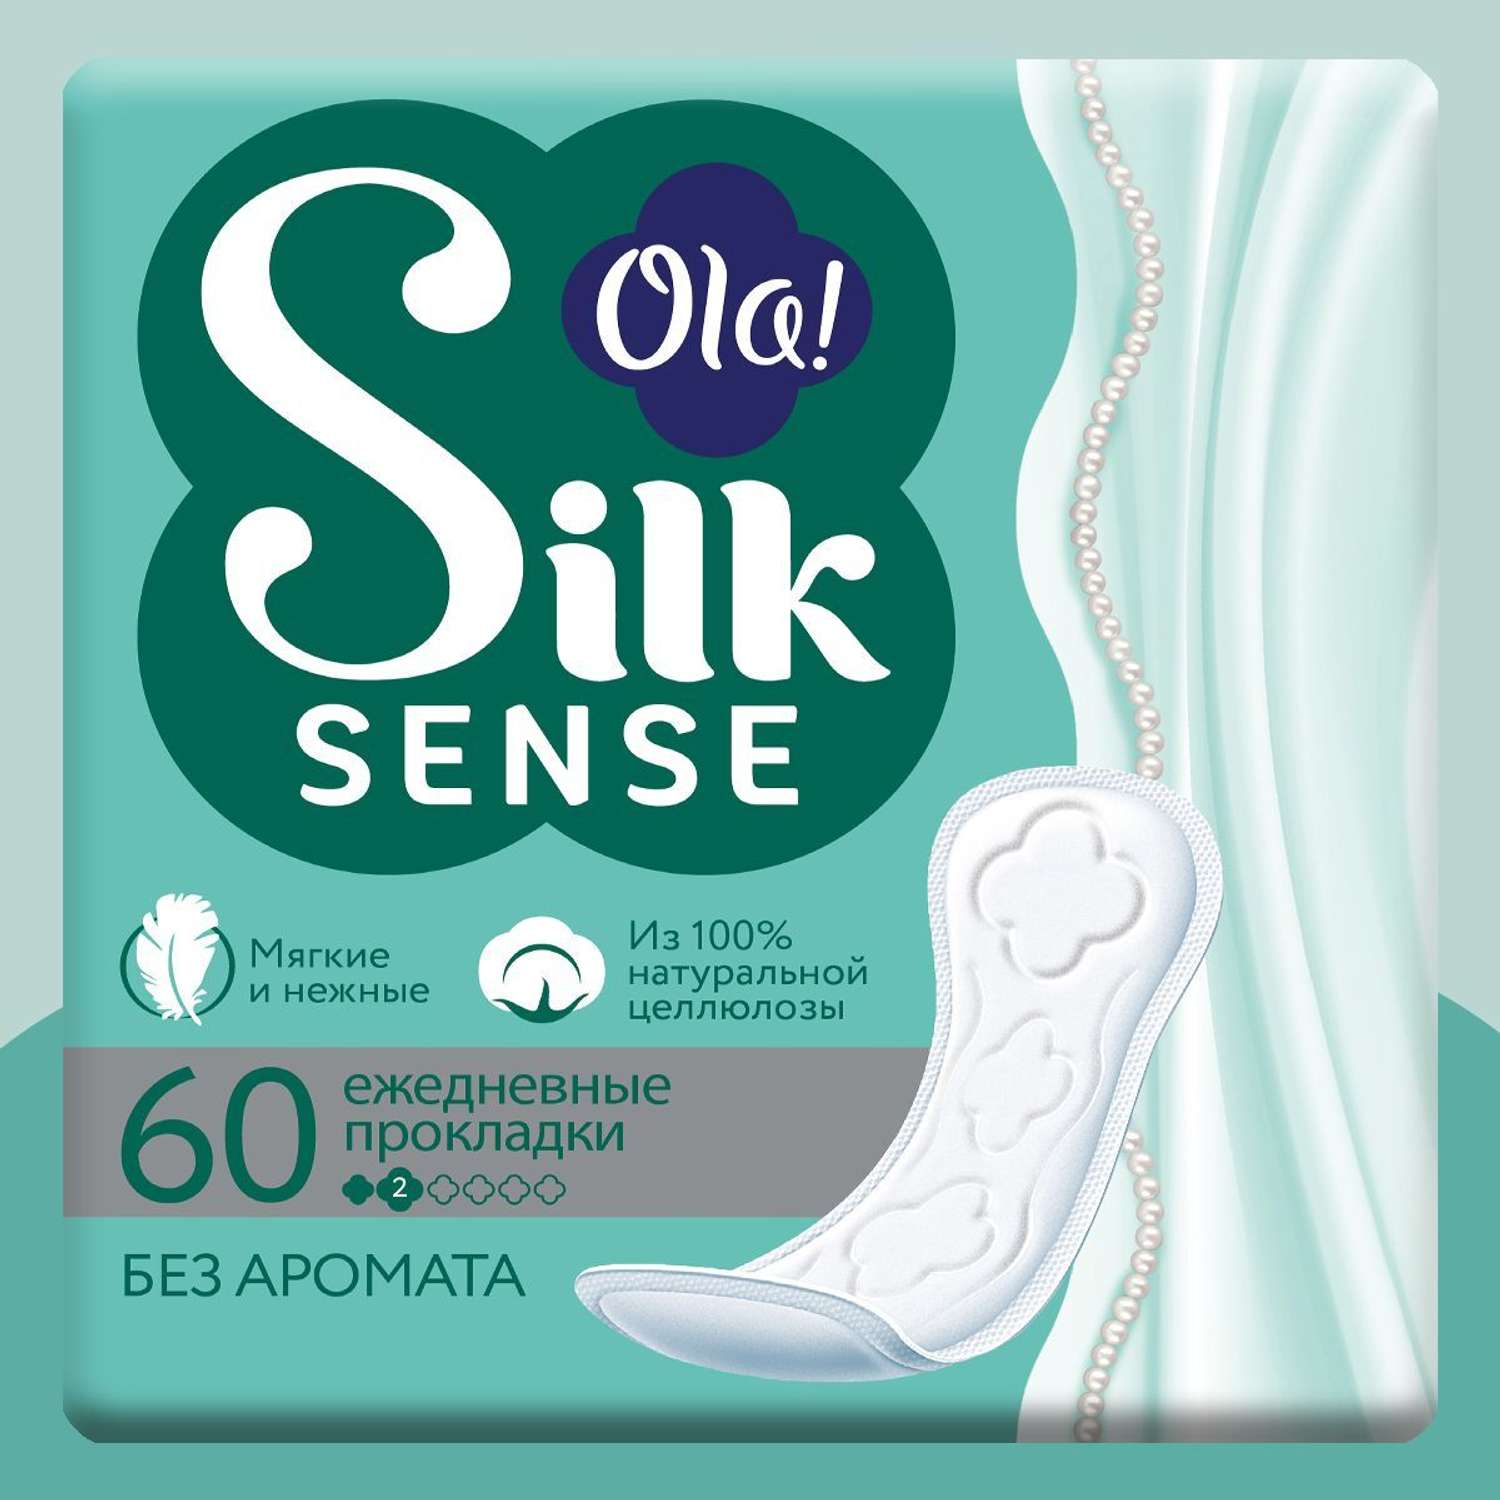 Ежедневные прокладки Ola! Silk Sense мягкие без аромата 60 шт - фото 1